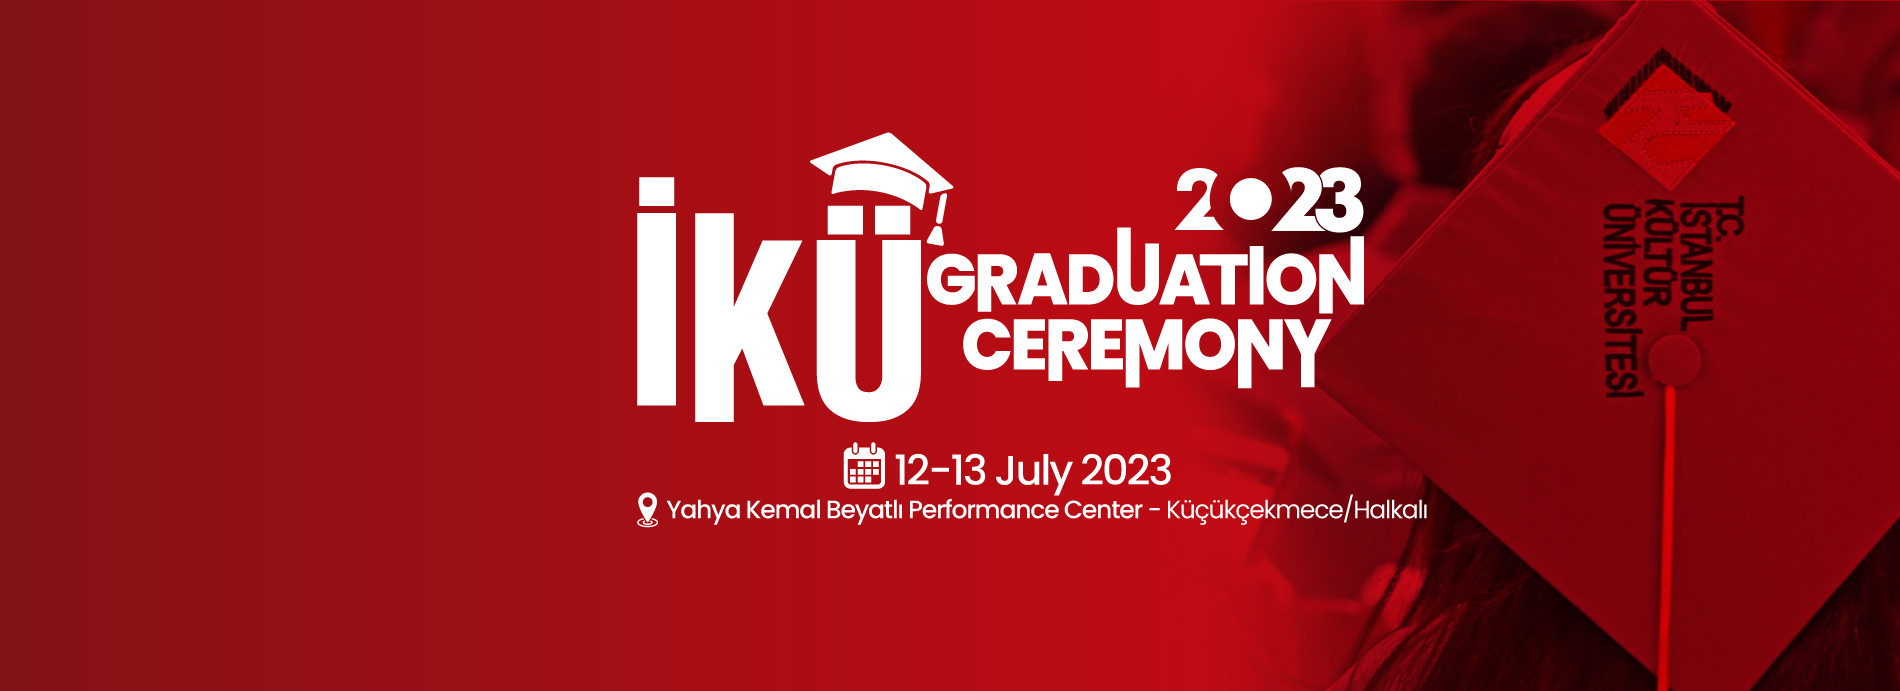 Istanbul Kültür University 2022-2023 Graduation Ceremony